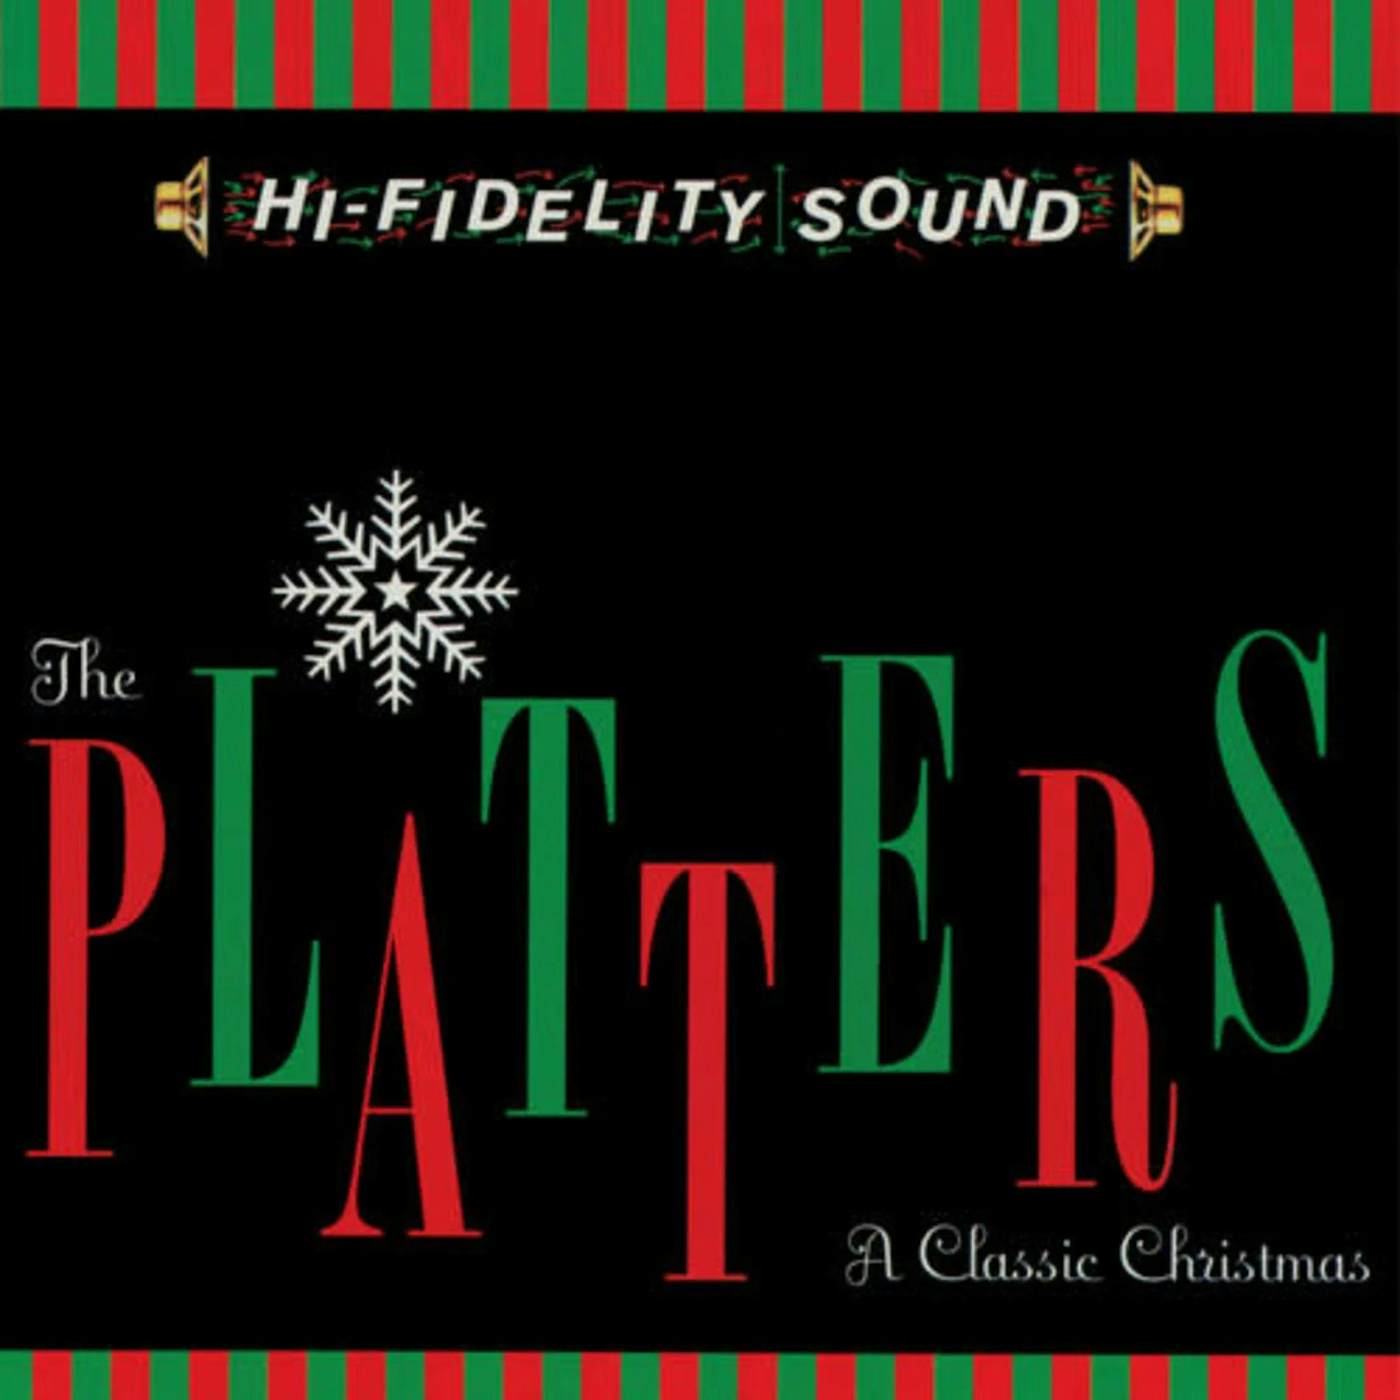 The Platters Classic Christmas Vinyl Record